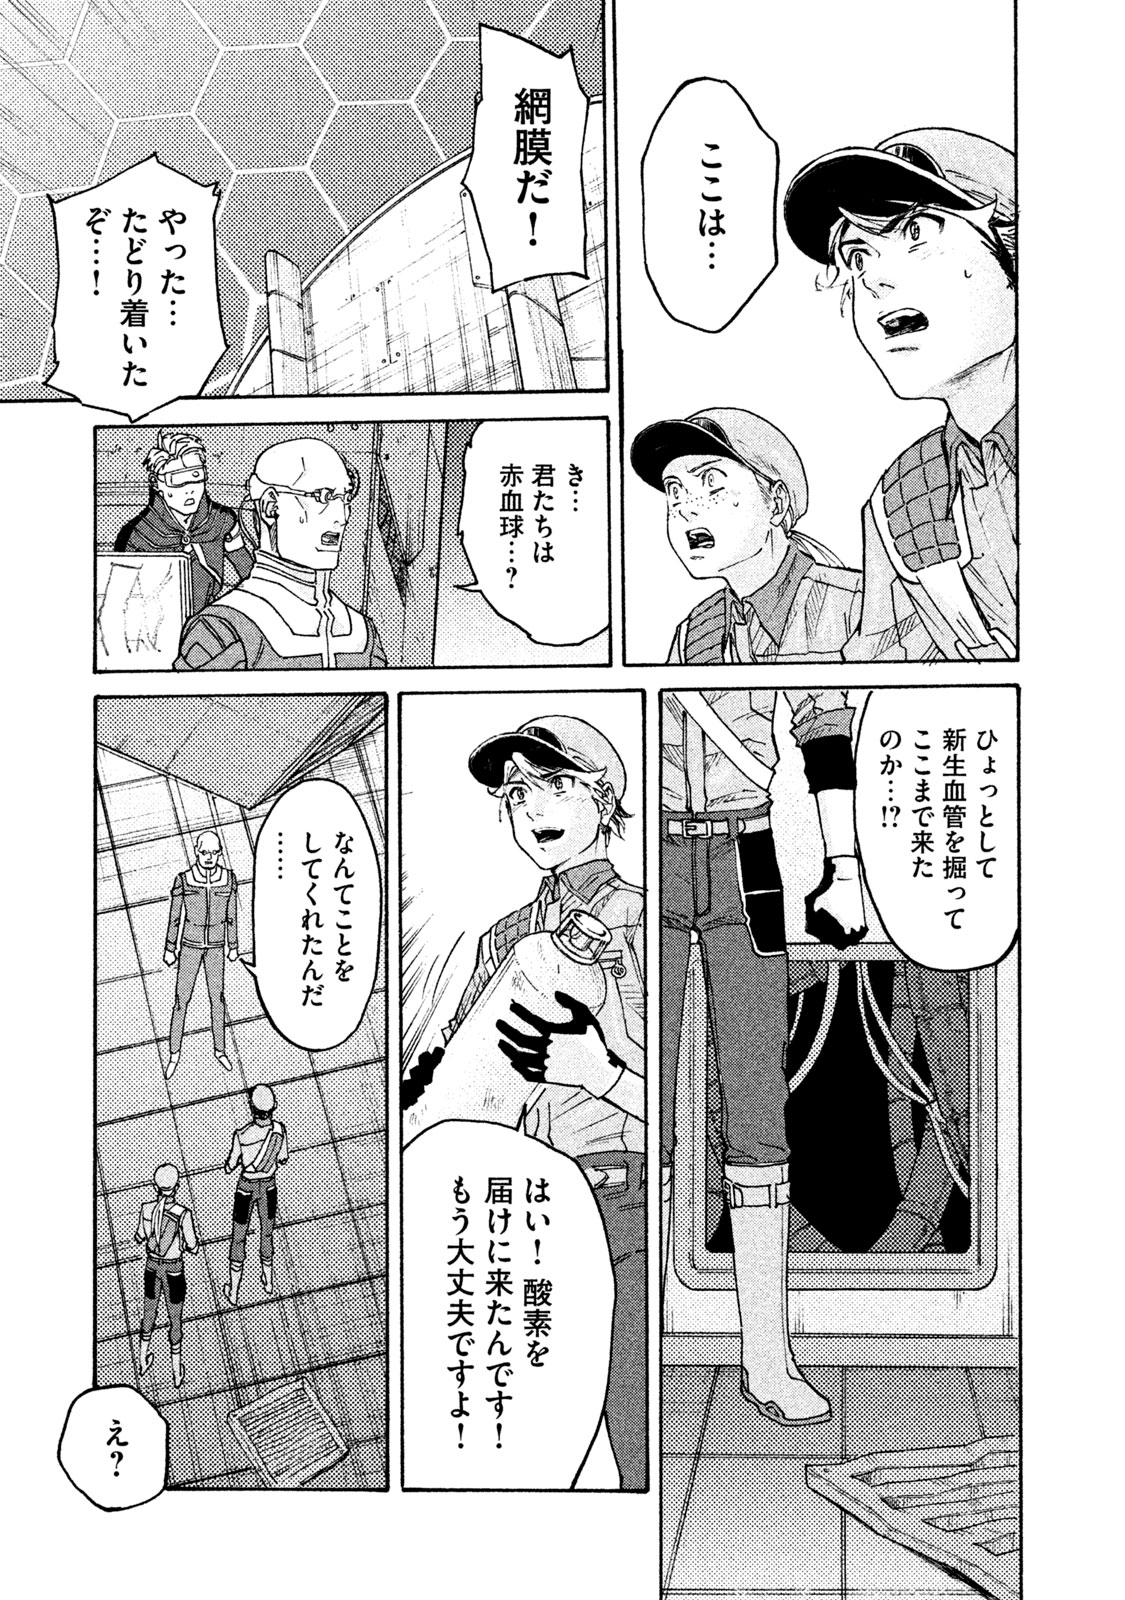 Hataraku Saibou BLACK - Chapter 25 - Page 21